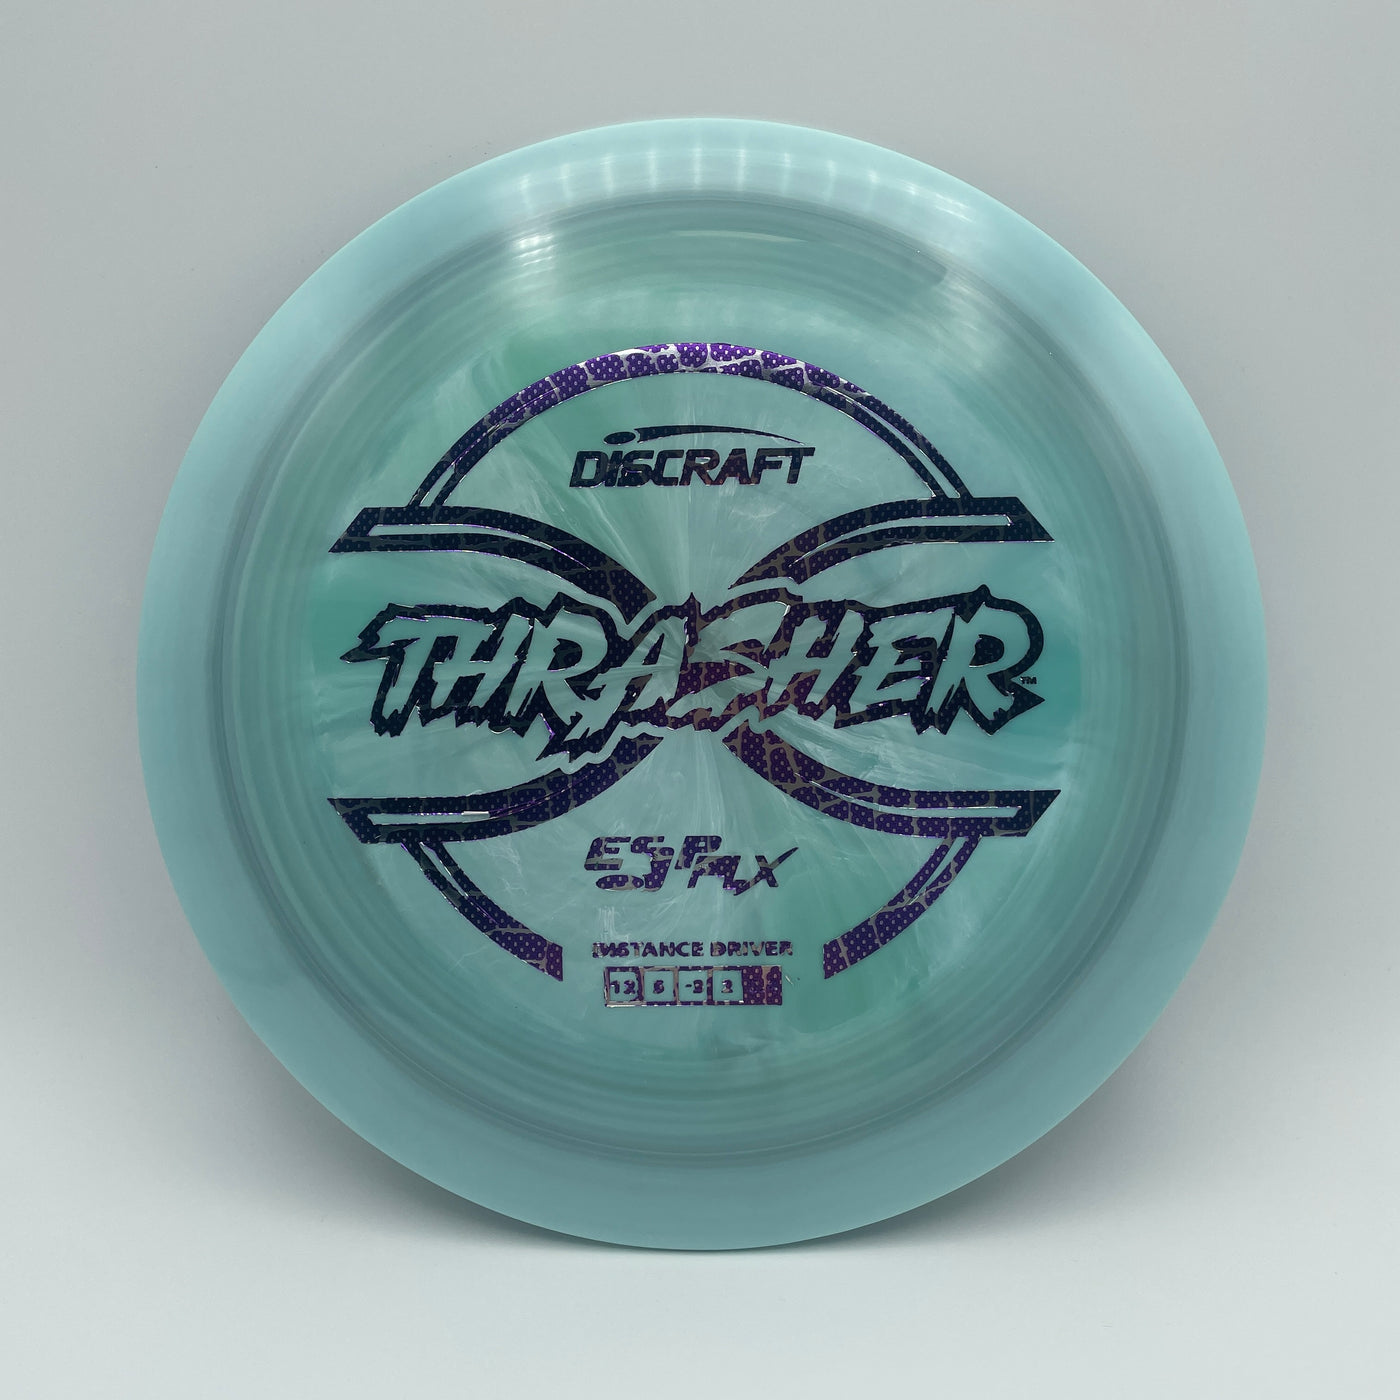 ESP FLX Thrasher